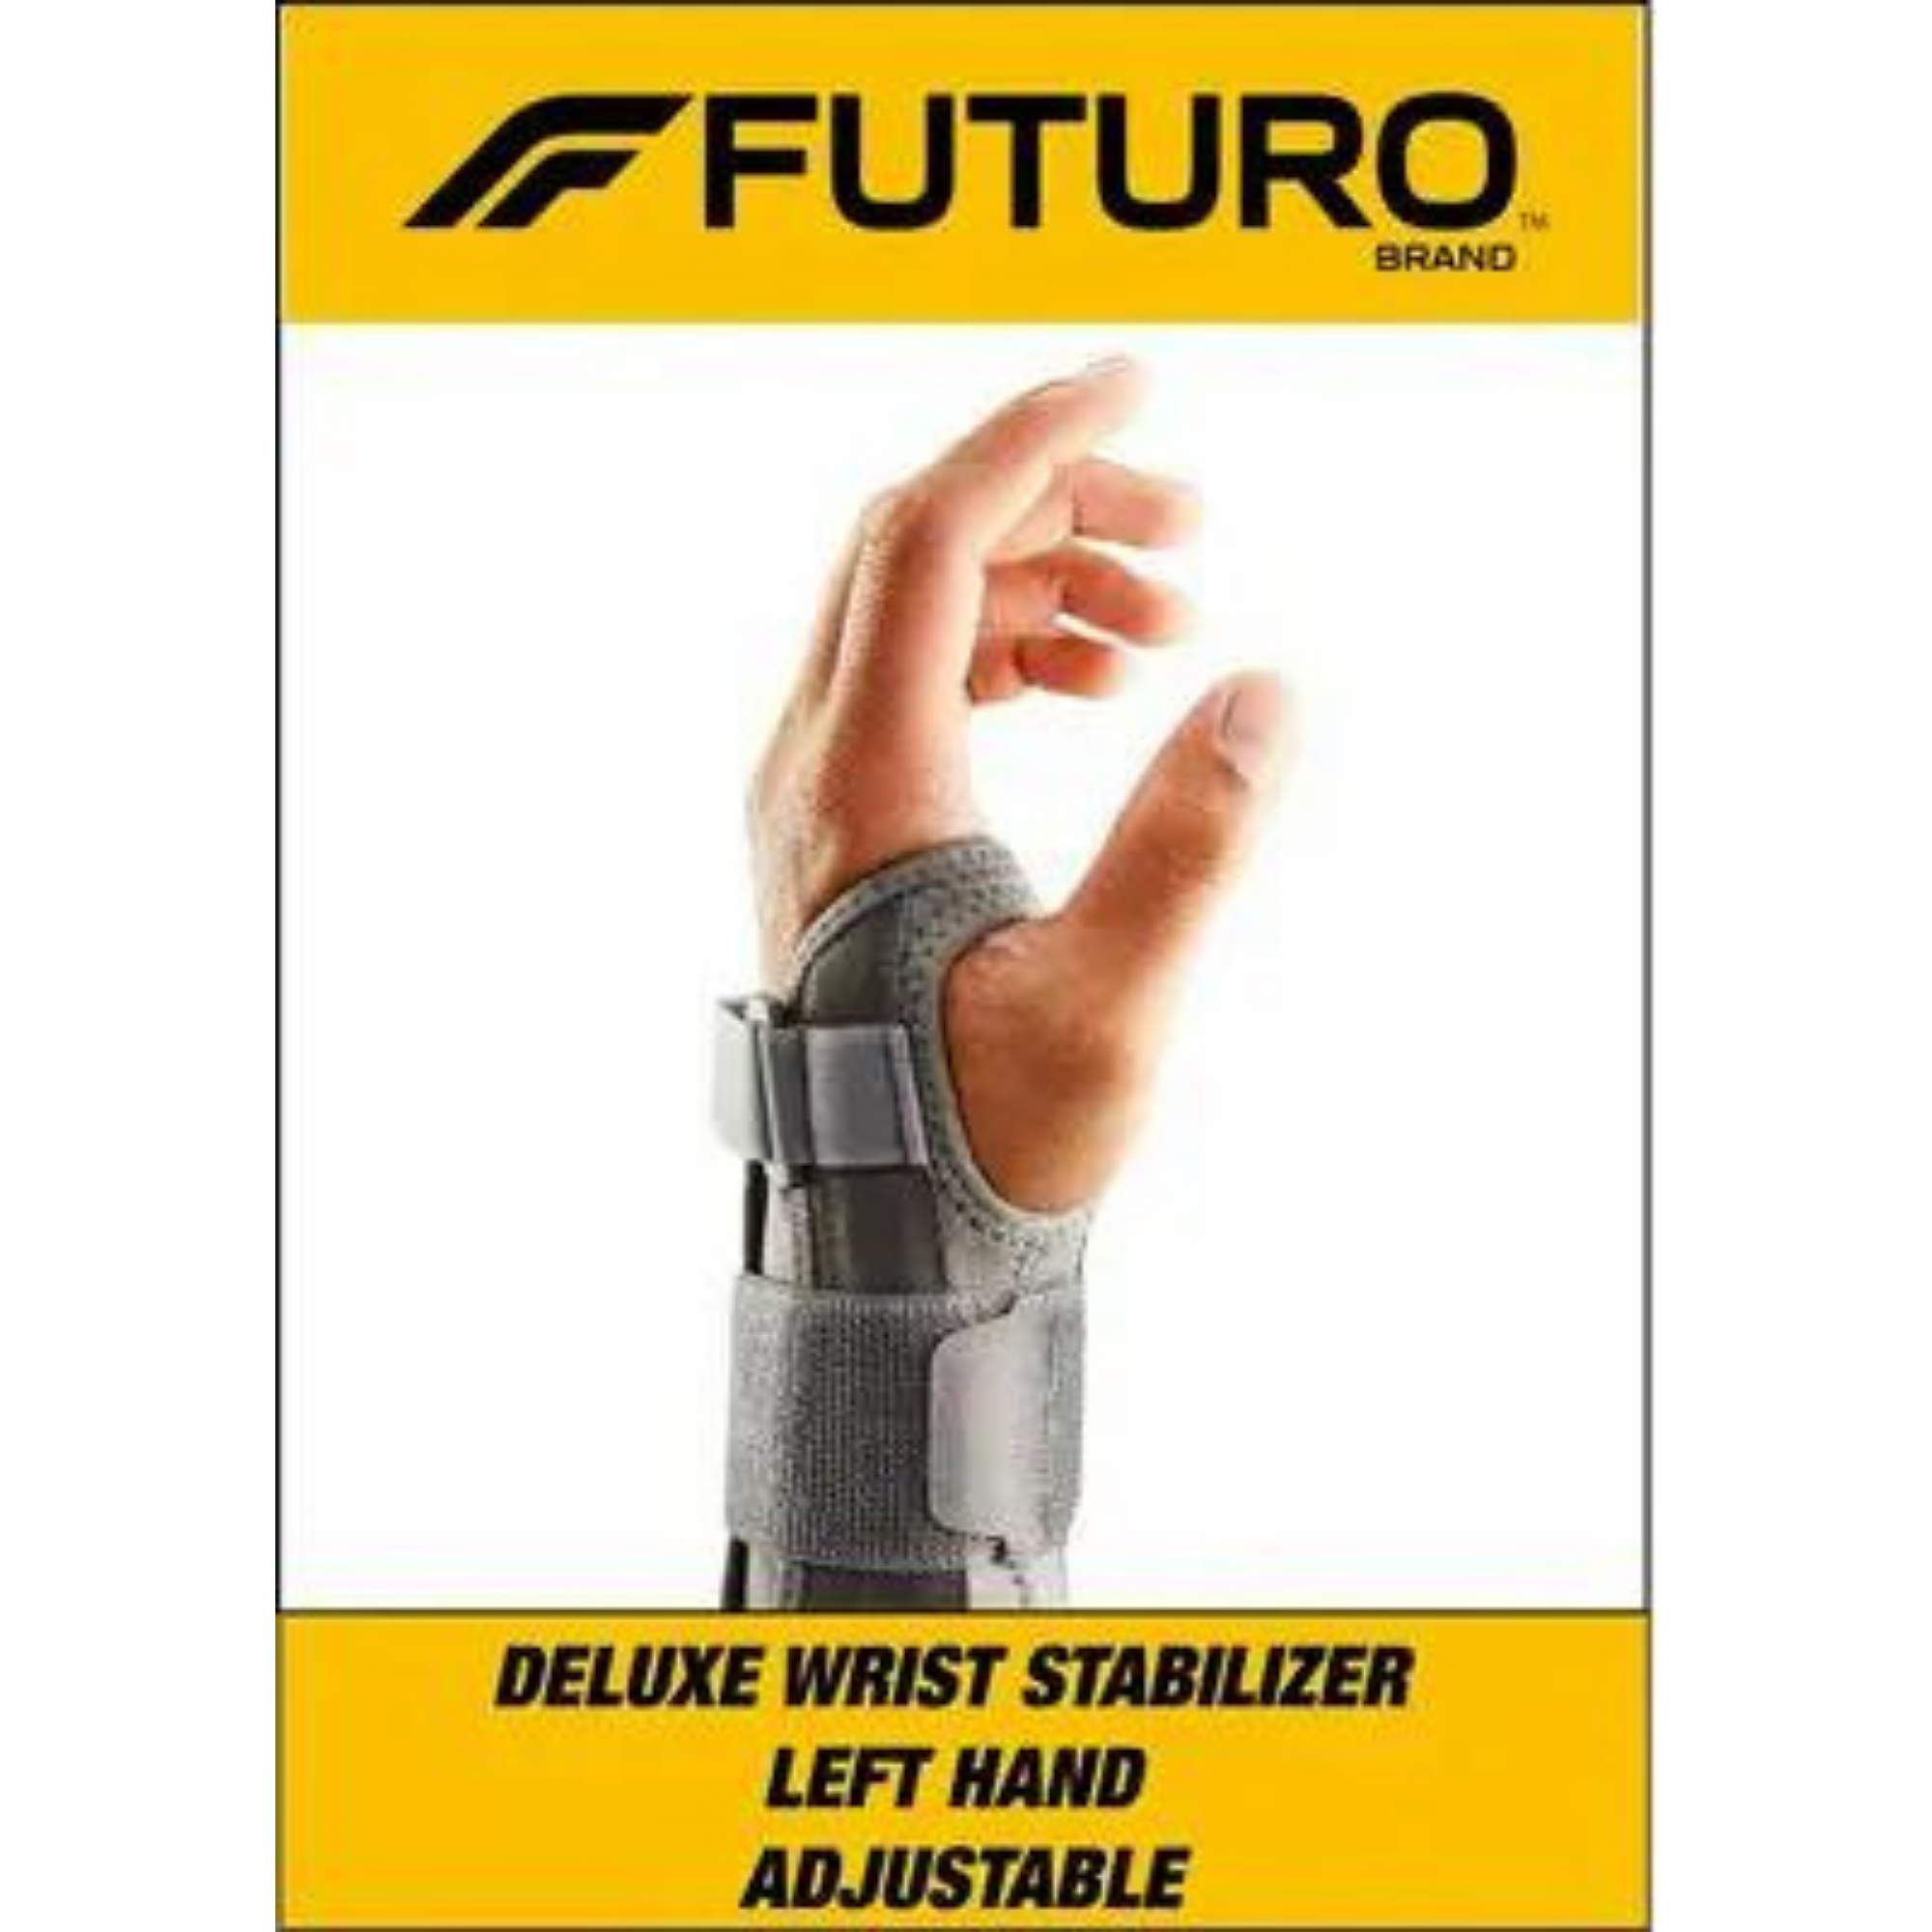 Futuro Deluxe Wrist Stabilizer Left Hand 09144ENT Small/Medium